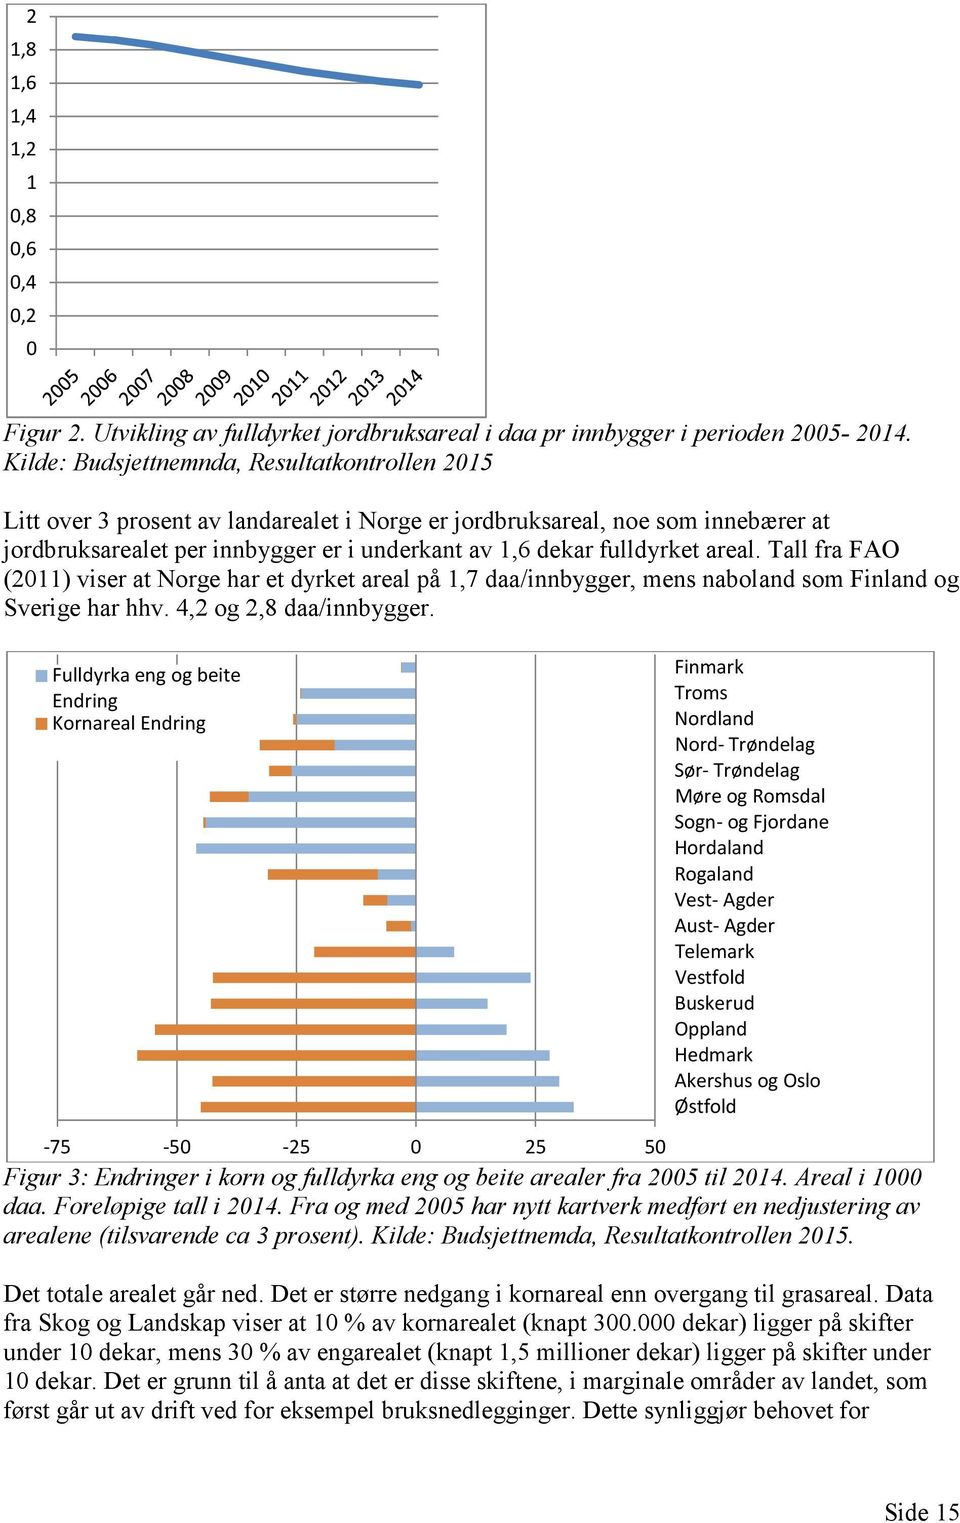 areal. Tall fra FAO (2011) viser at Norge har et dyrket areal på 1,7 daa/innbygger, mens naboland som Finland og Sverige har hhv. 4,2 og 2,8 daa/innbygger.